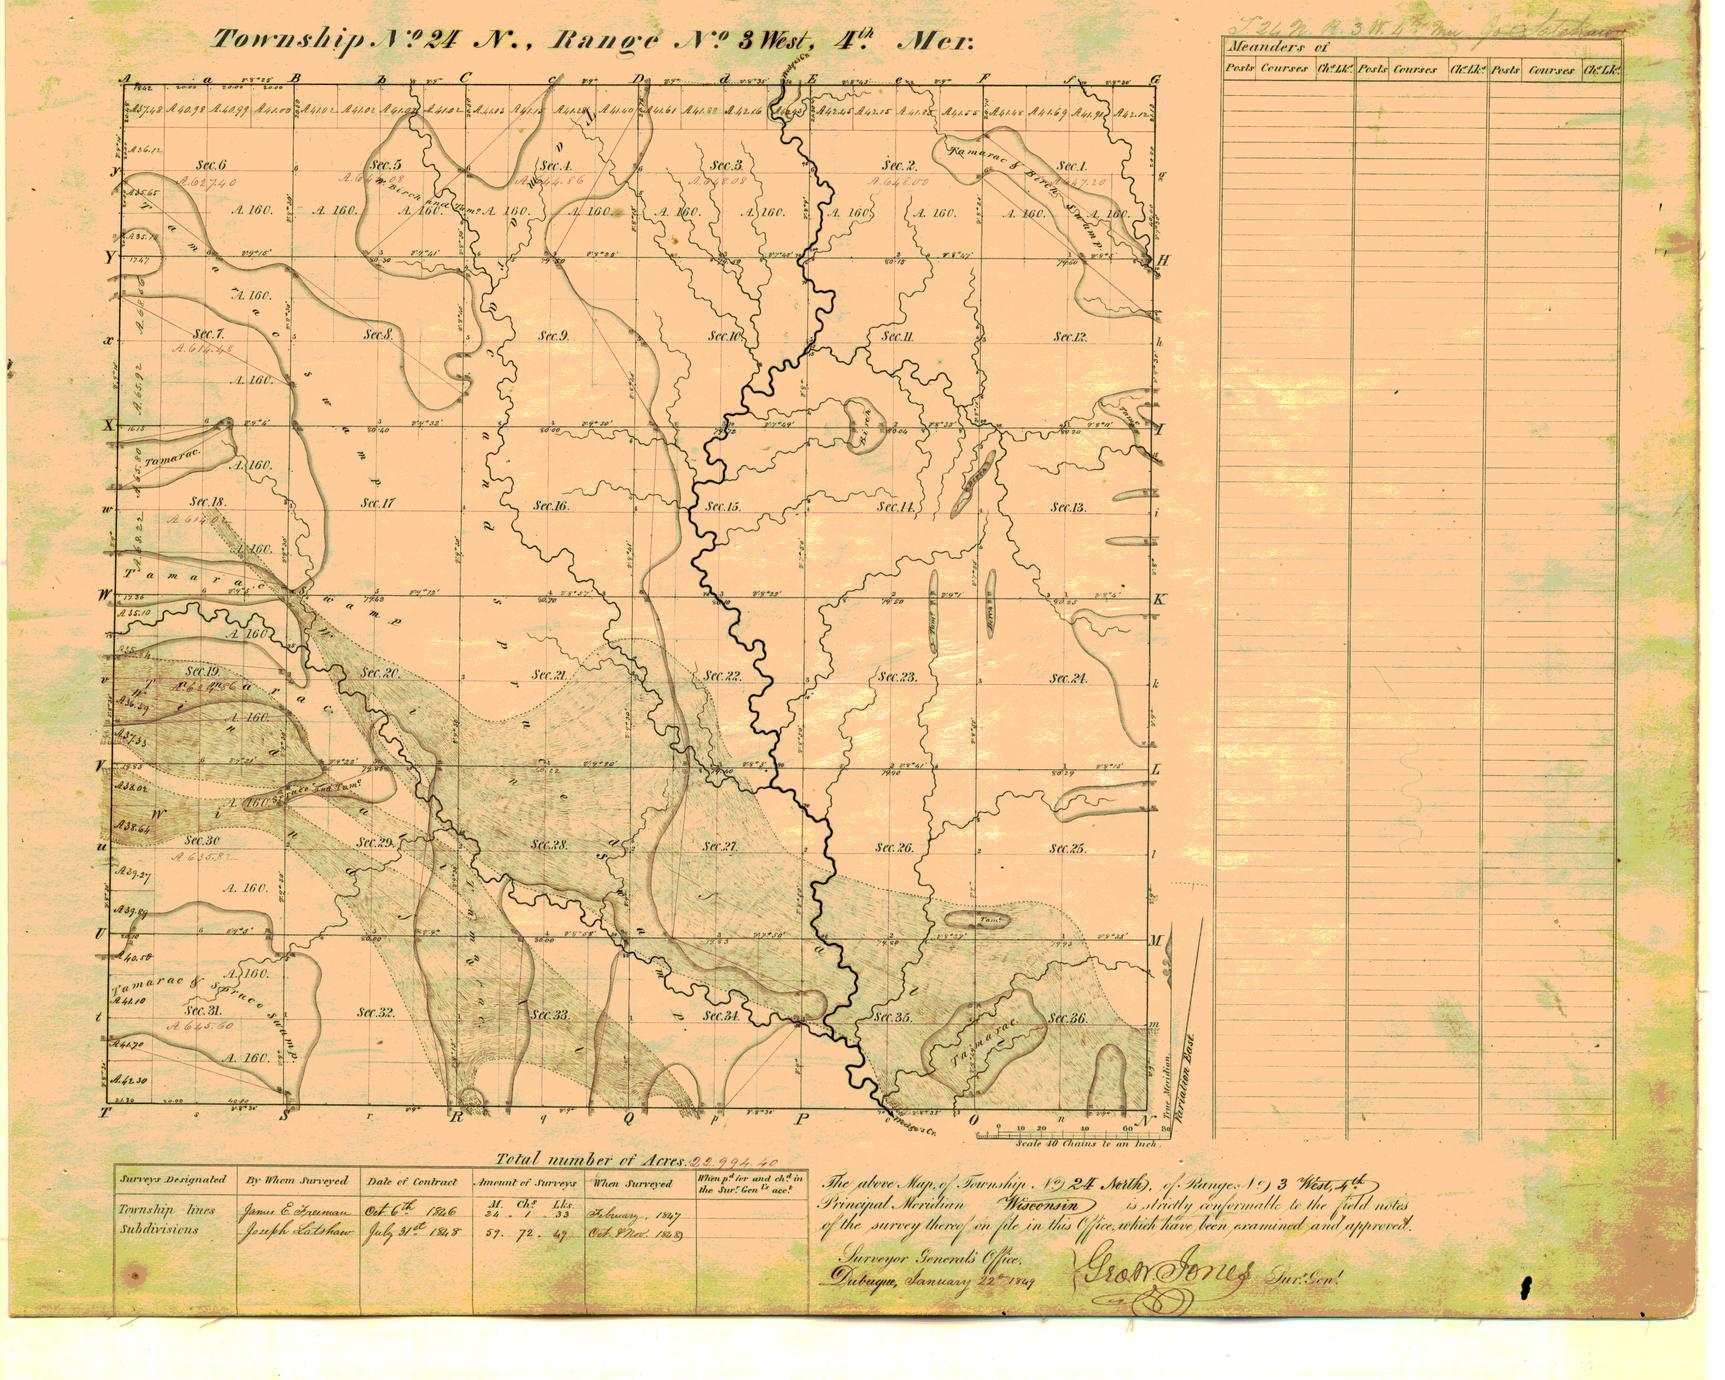 [Public Land Survey System map: Wisconsin Township 24 North, Range 03 West]